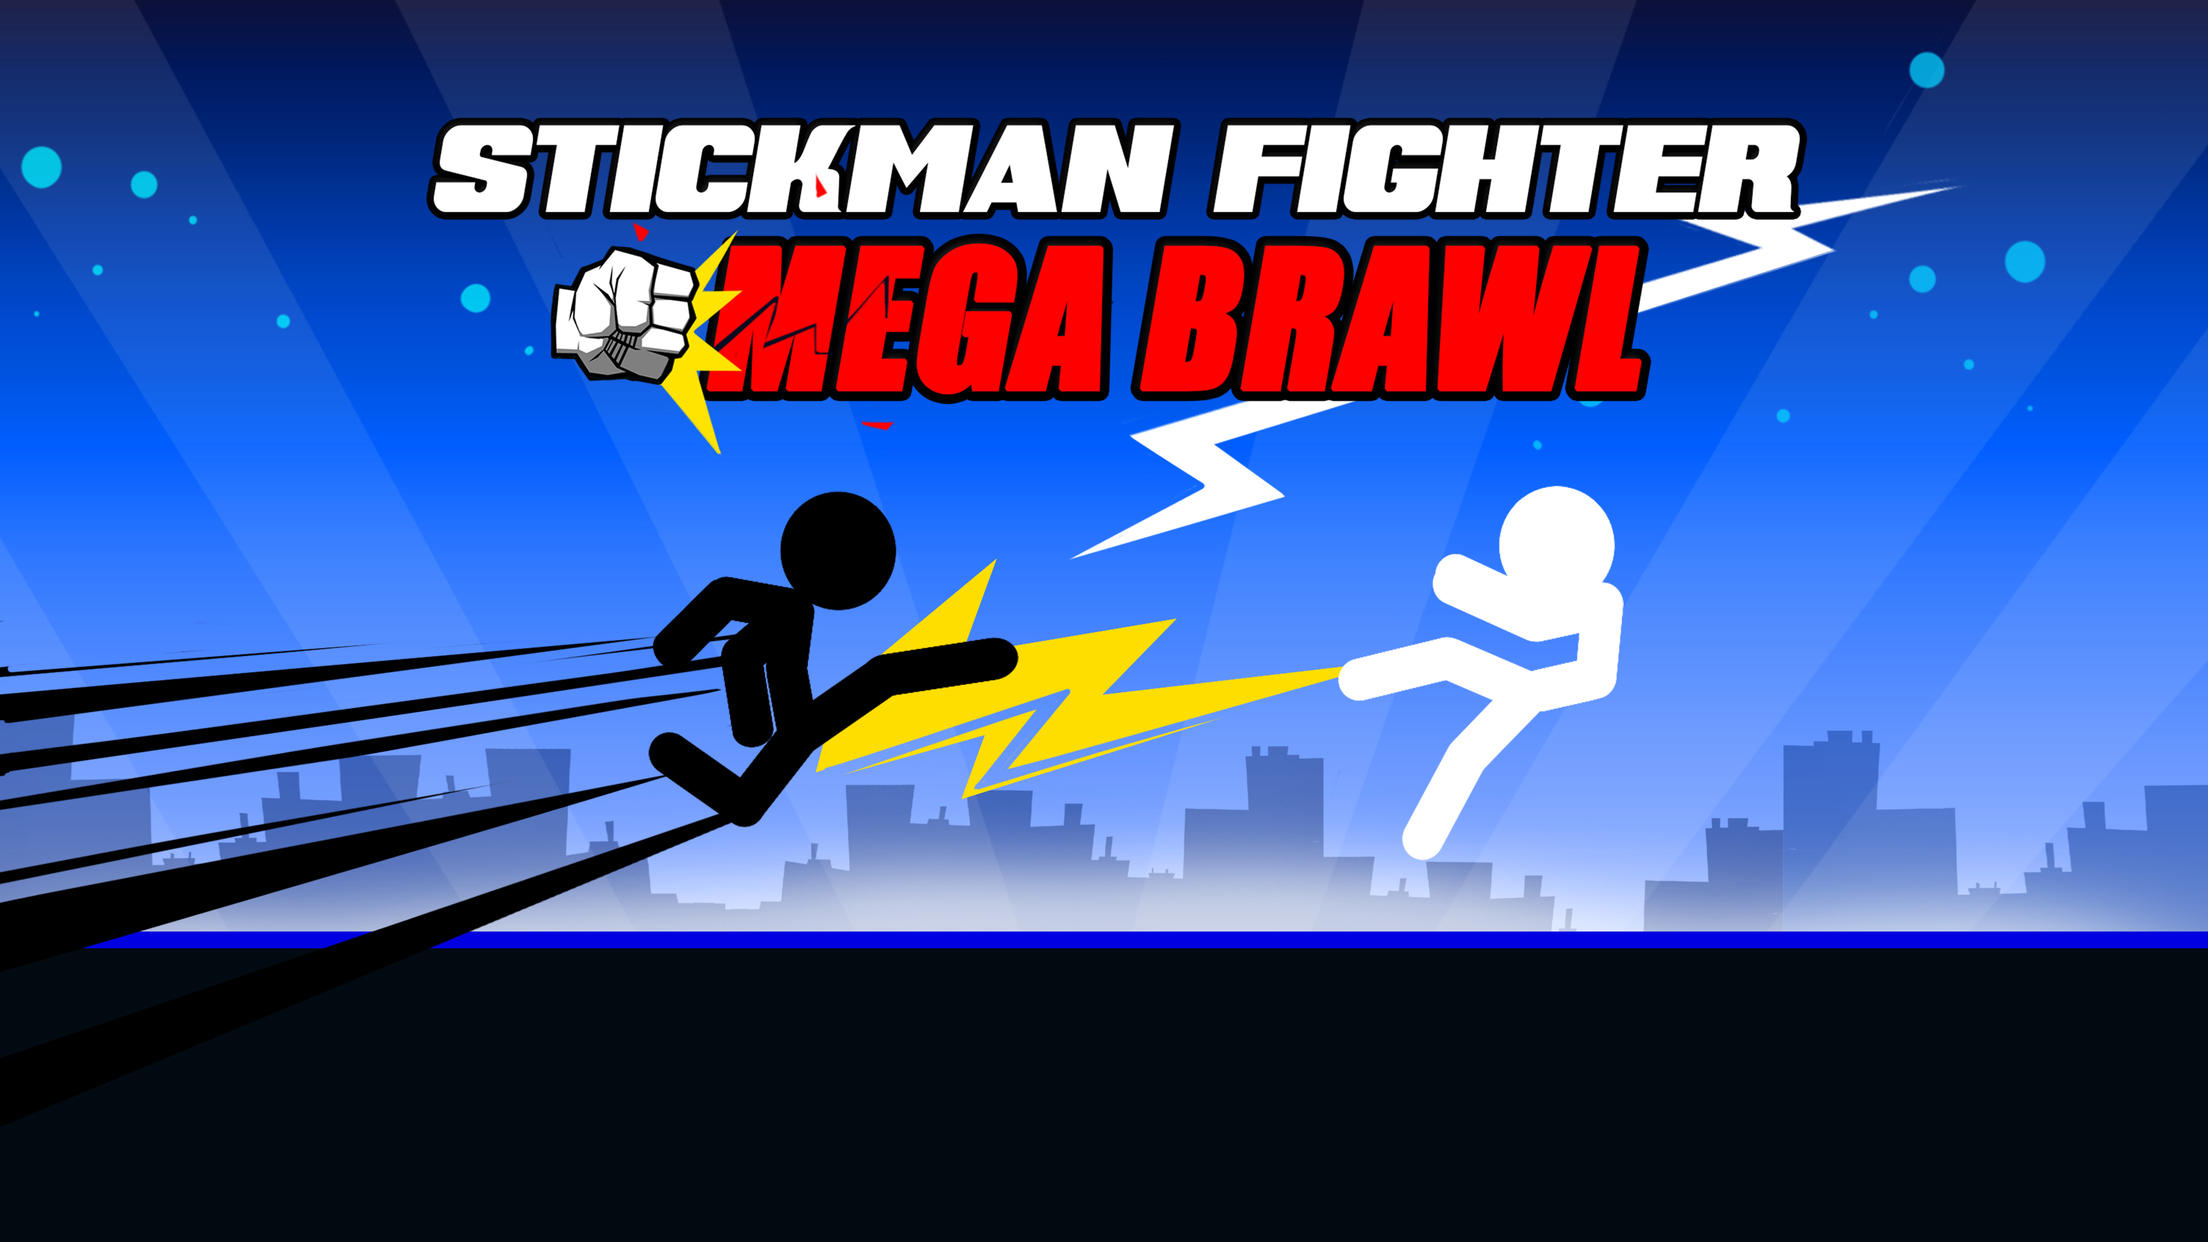 Stickman Fighter : Mega Brawlのキャプチャ